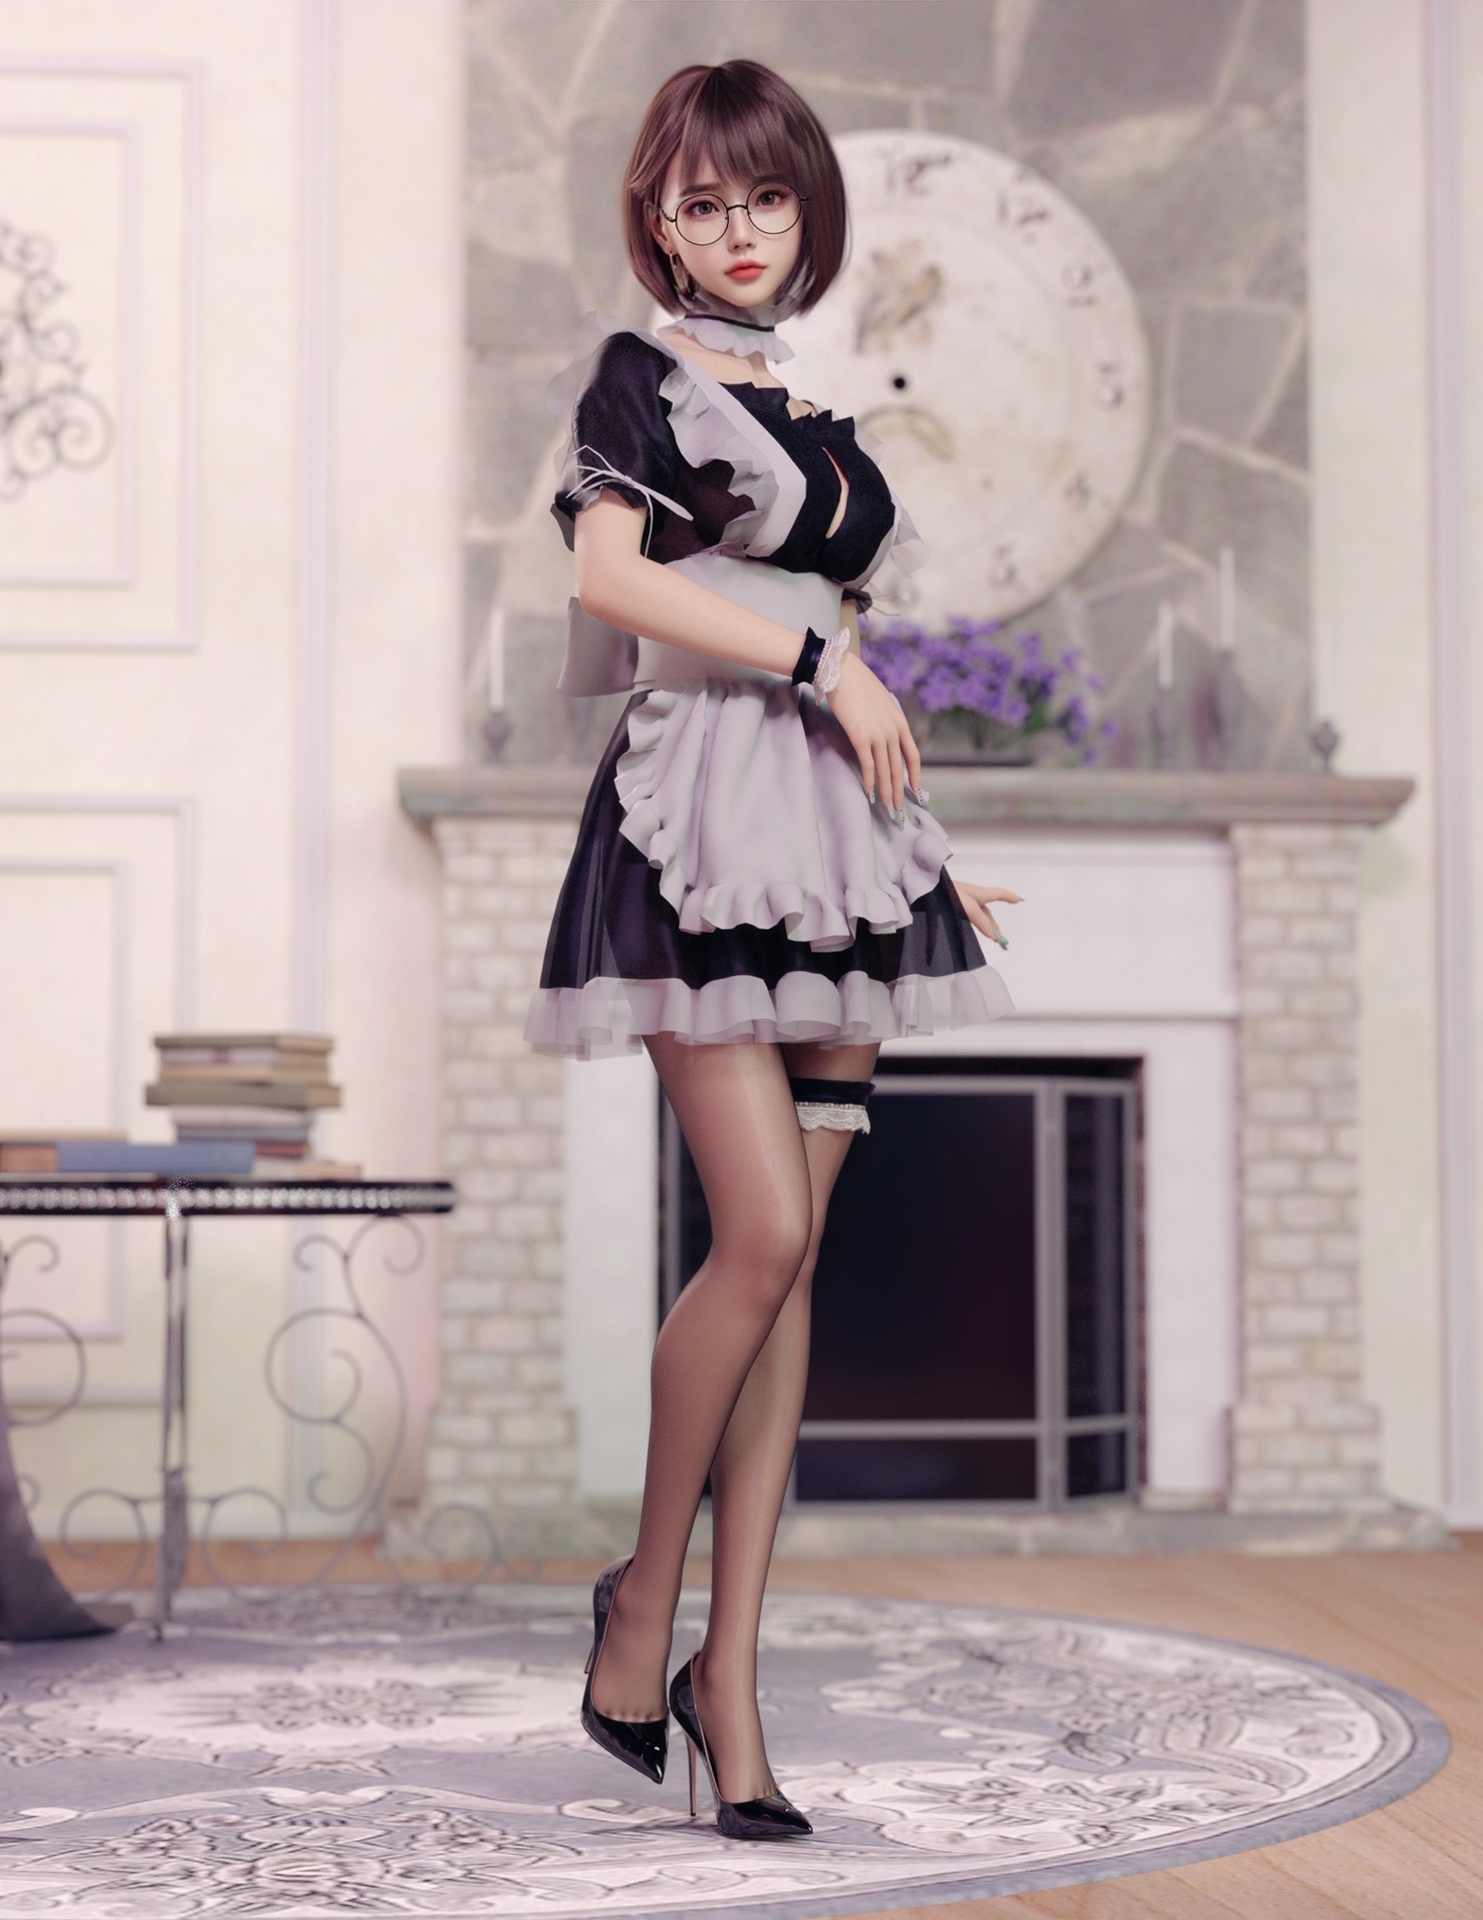 Fantasy Girl High Heels Maid Outfit Heels 3D Luck Zs 1483x1920